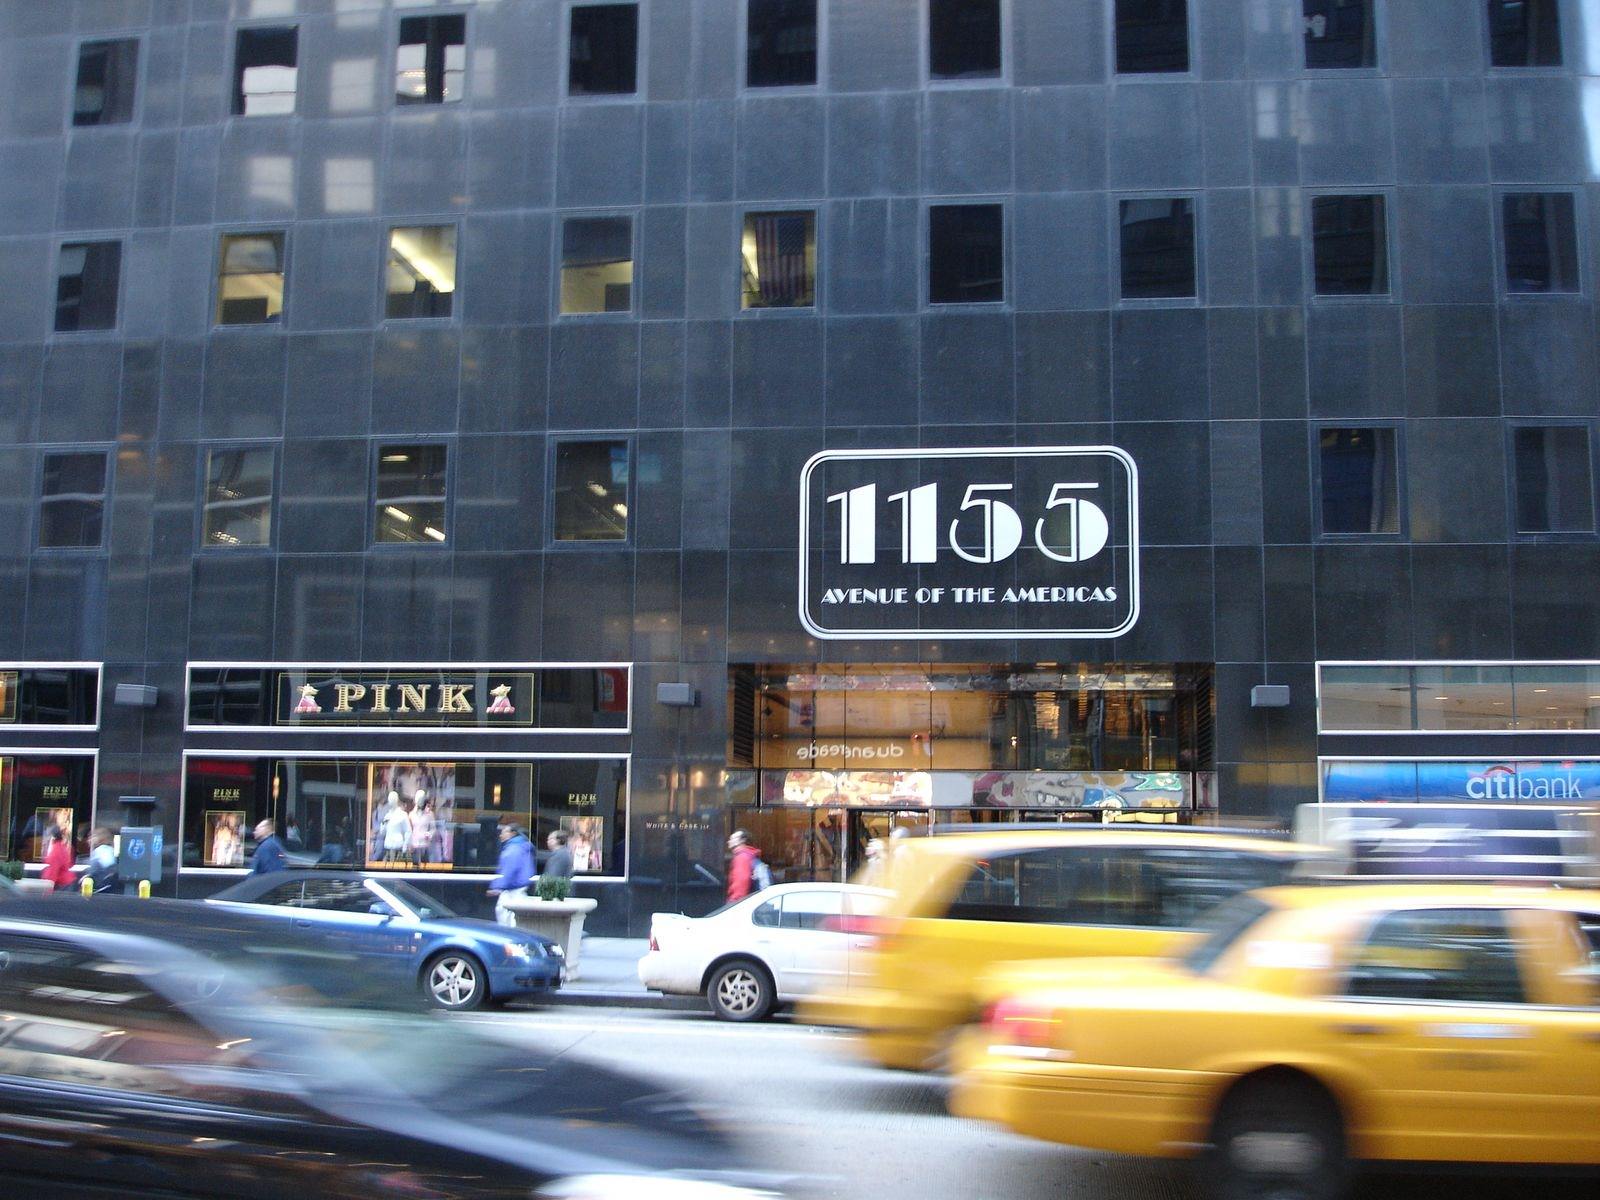 New York 1155 Avenue of the America